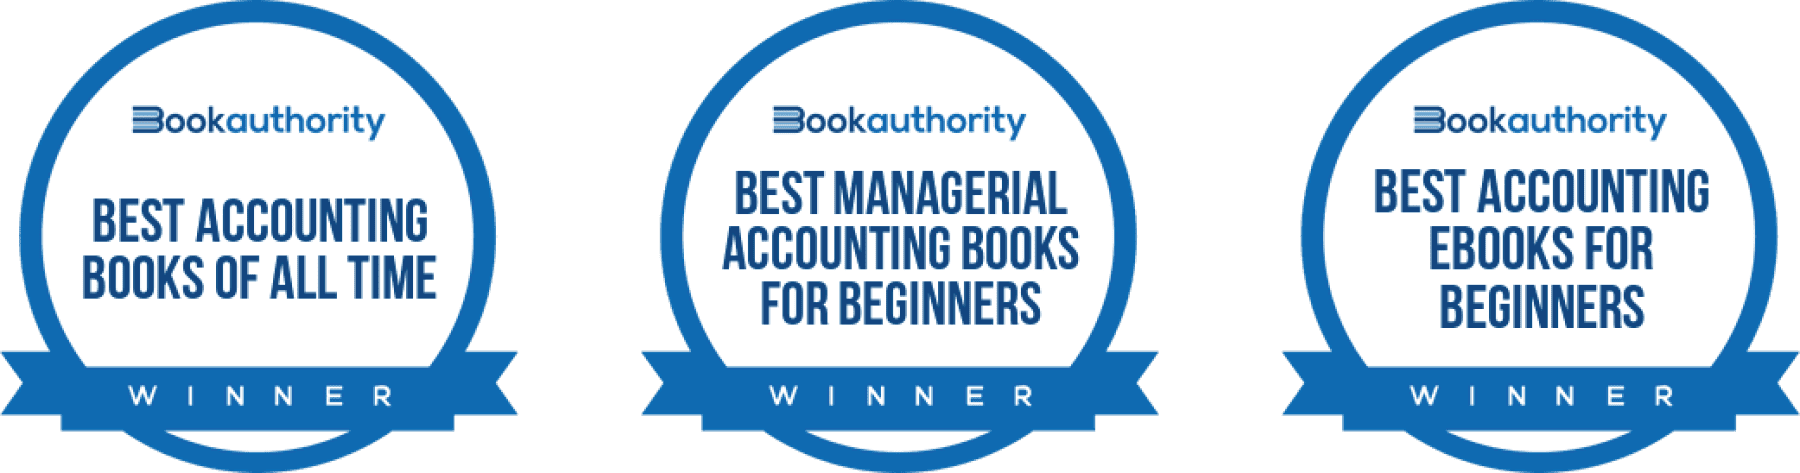 BookAuthorityBadges_Accounting